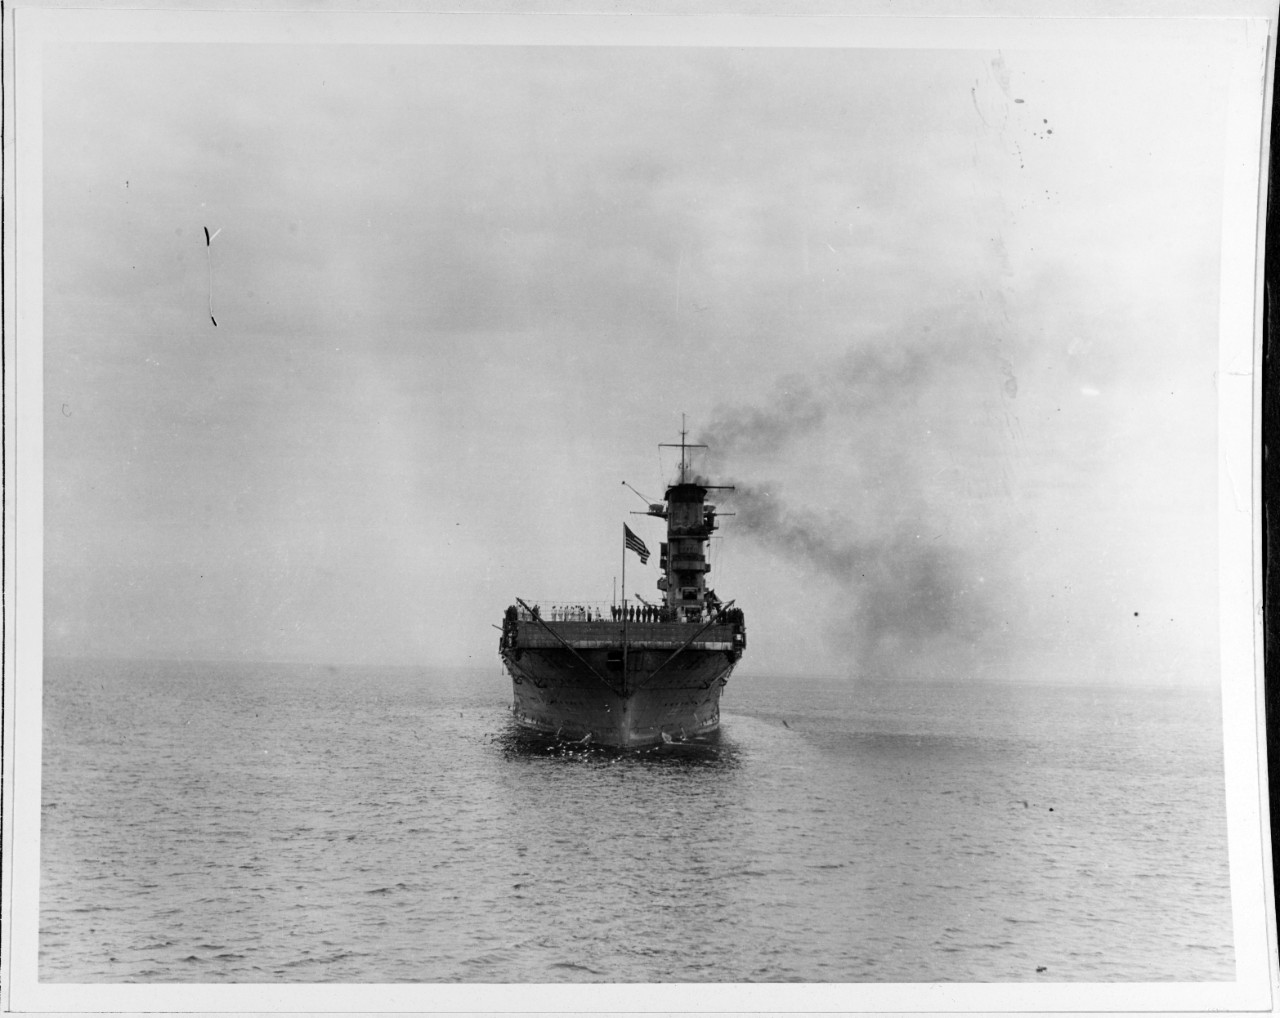 USS LEXINGTON (CV-2) off Panama City on March 25, 1928.  